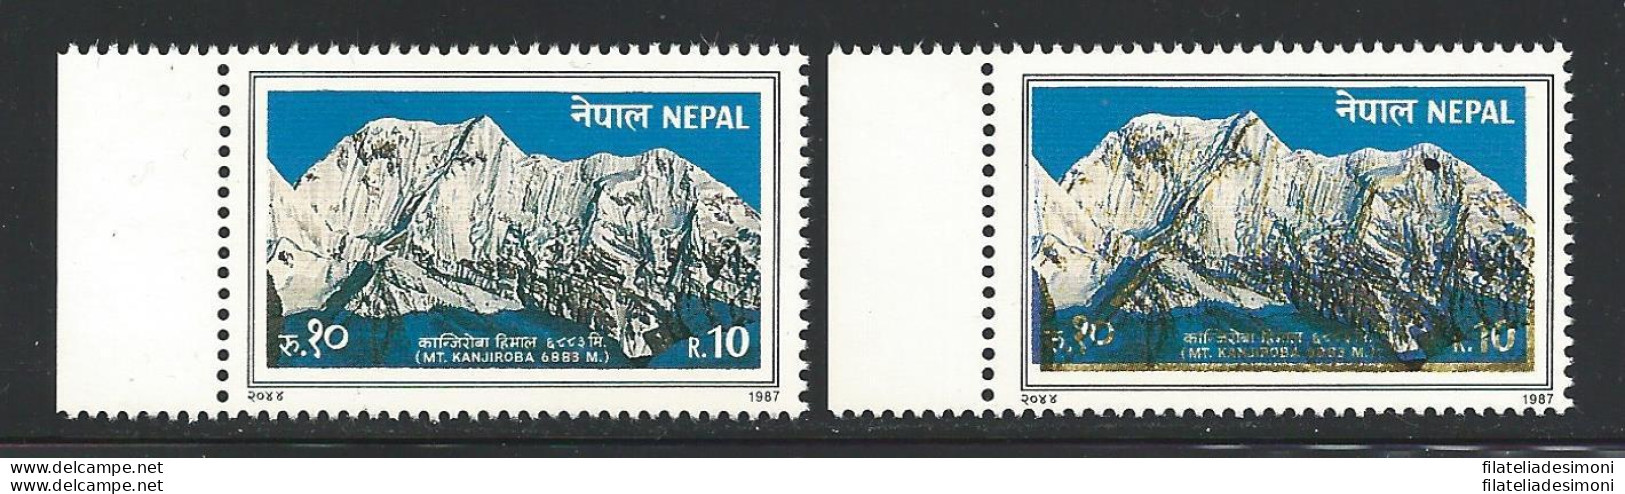 1987 NEPAL, SG N° 495 Turismo  MNH/**  VARIETA  STAMPA SPOSTATA - Népal